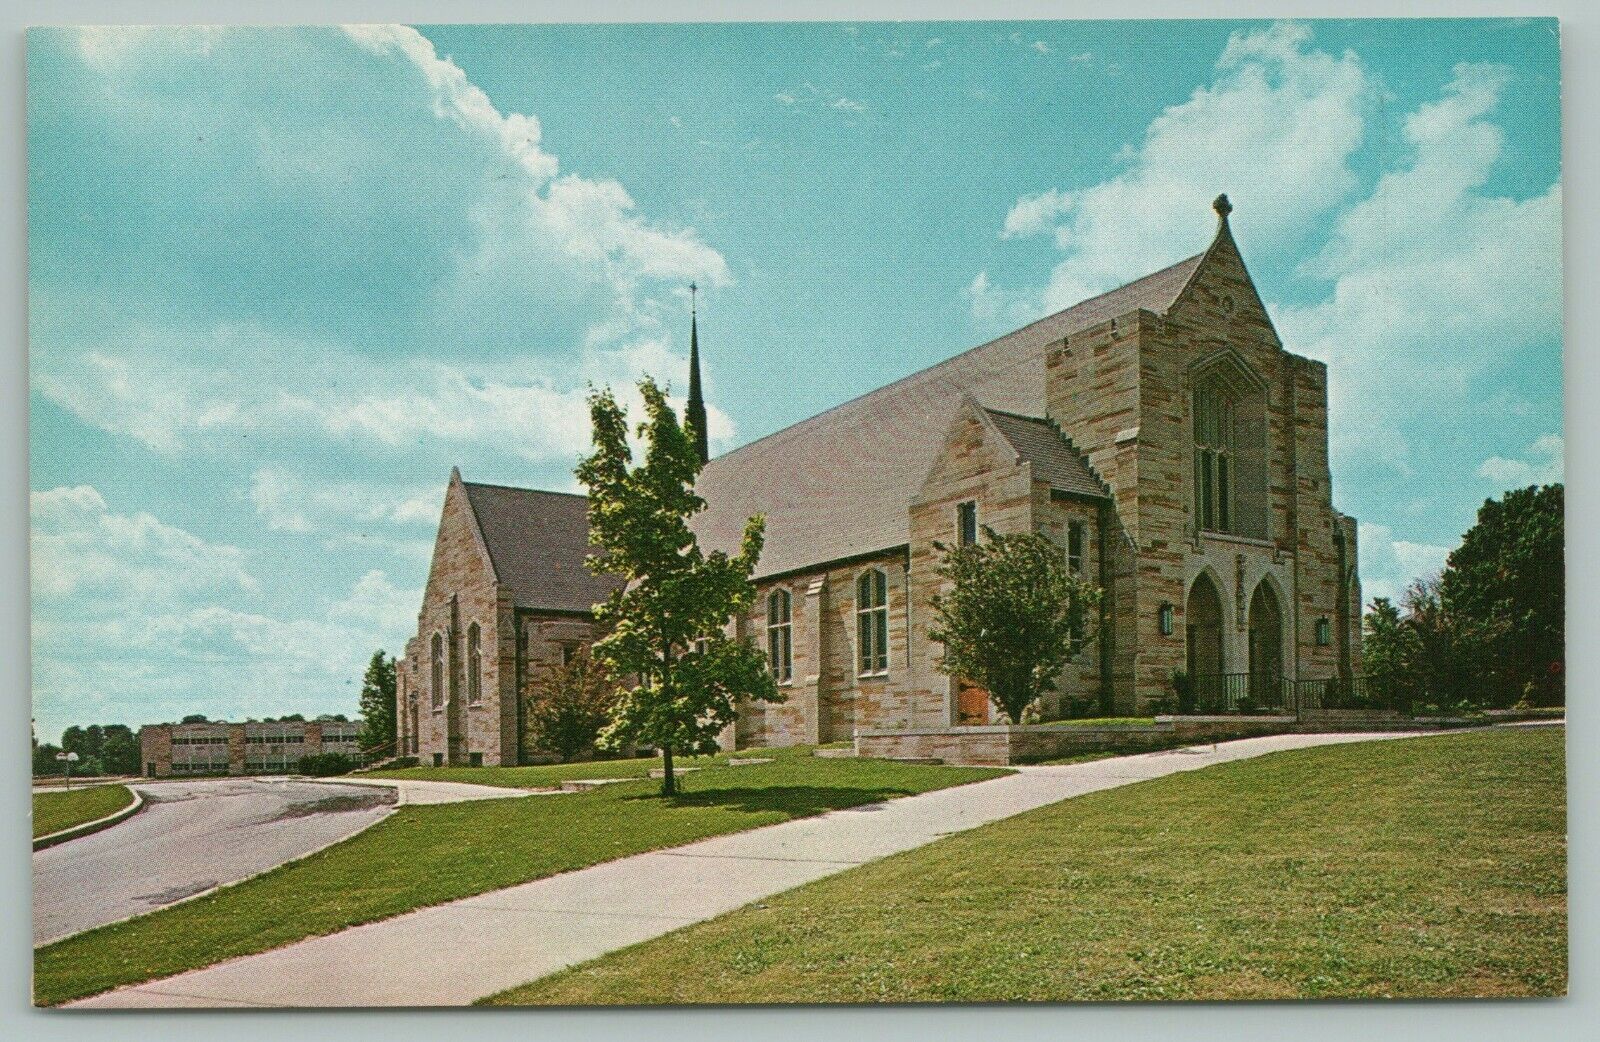 Bloomington Indiana~St Charles Borromeo Catholic Church~Circular Driveway~1950s